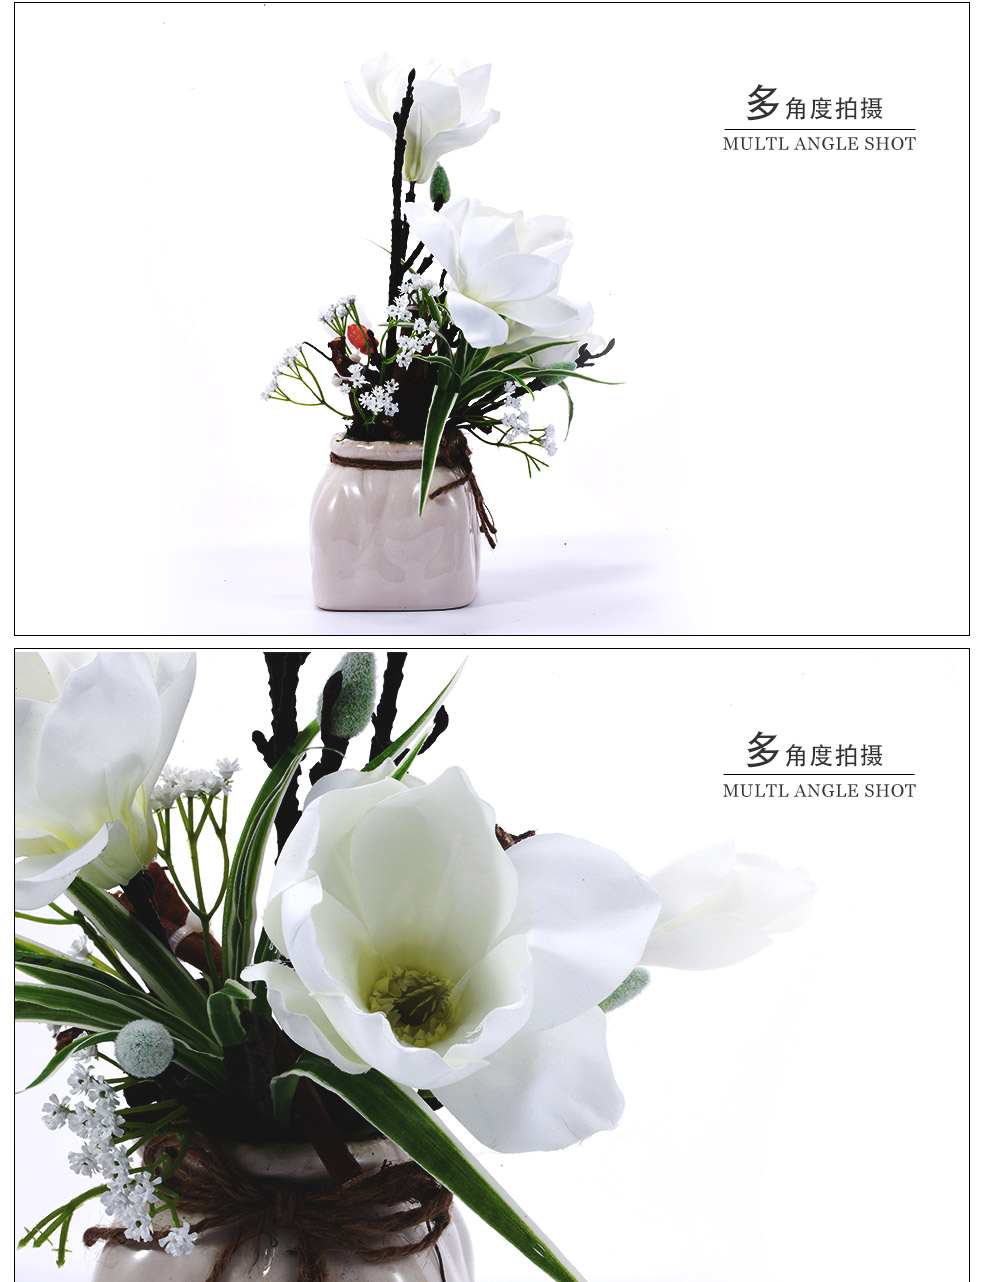 Elegant magnolia flower XL-1010-005 basin simulation2